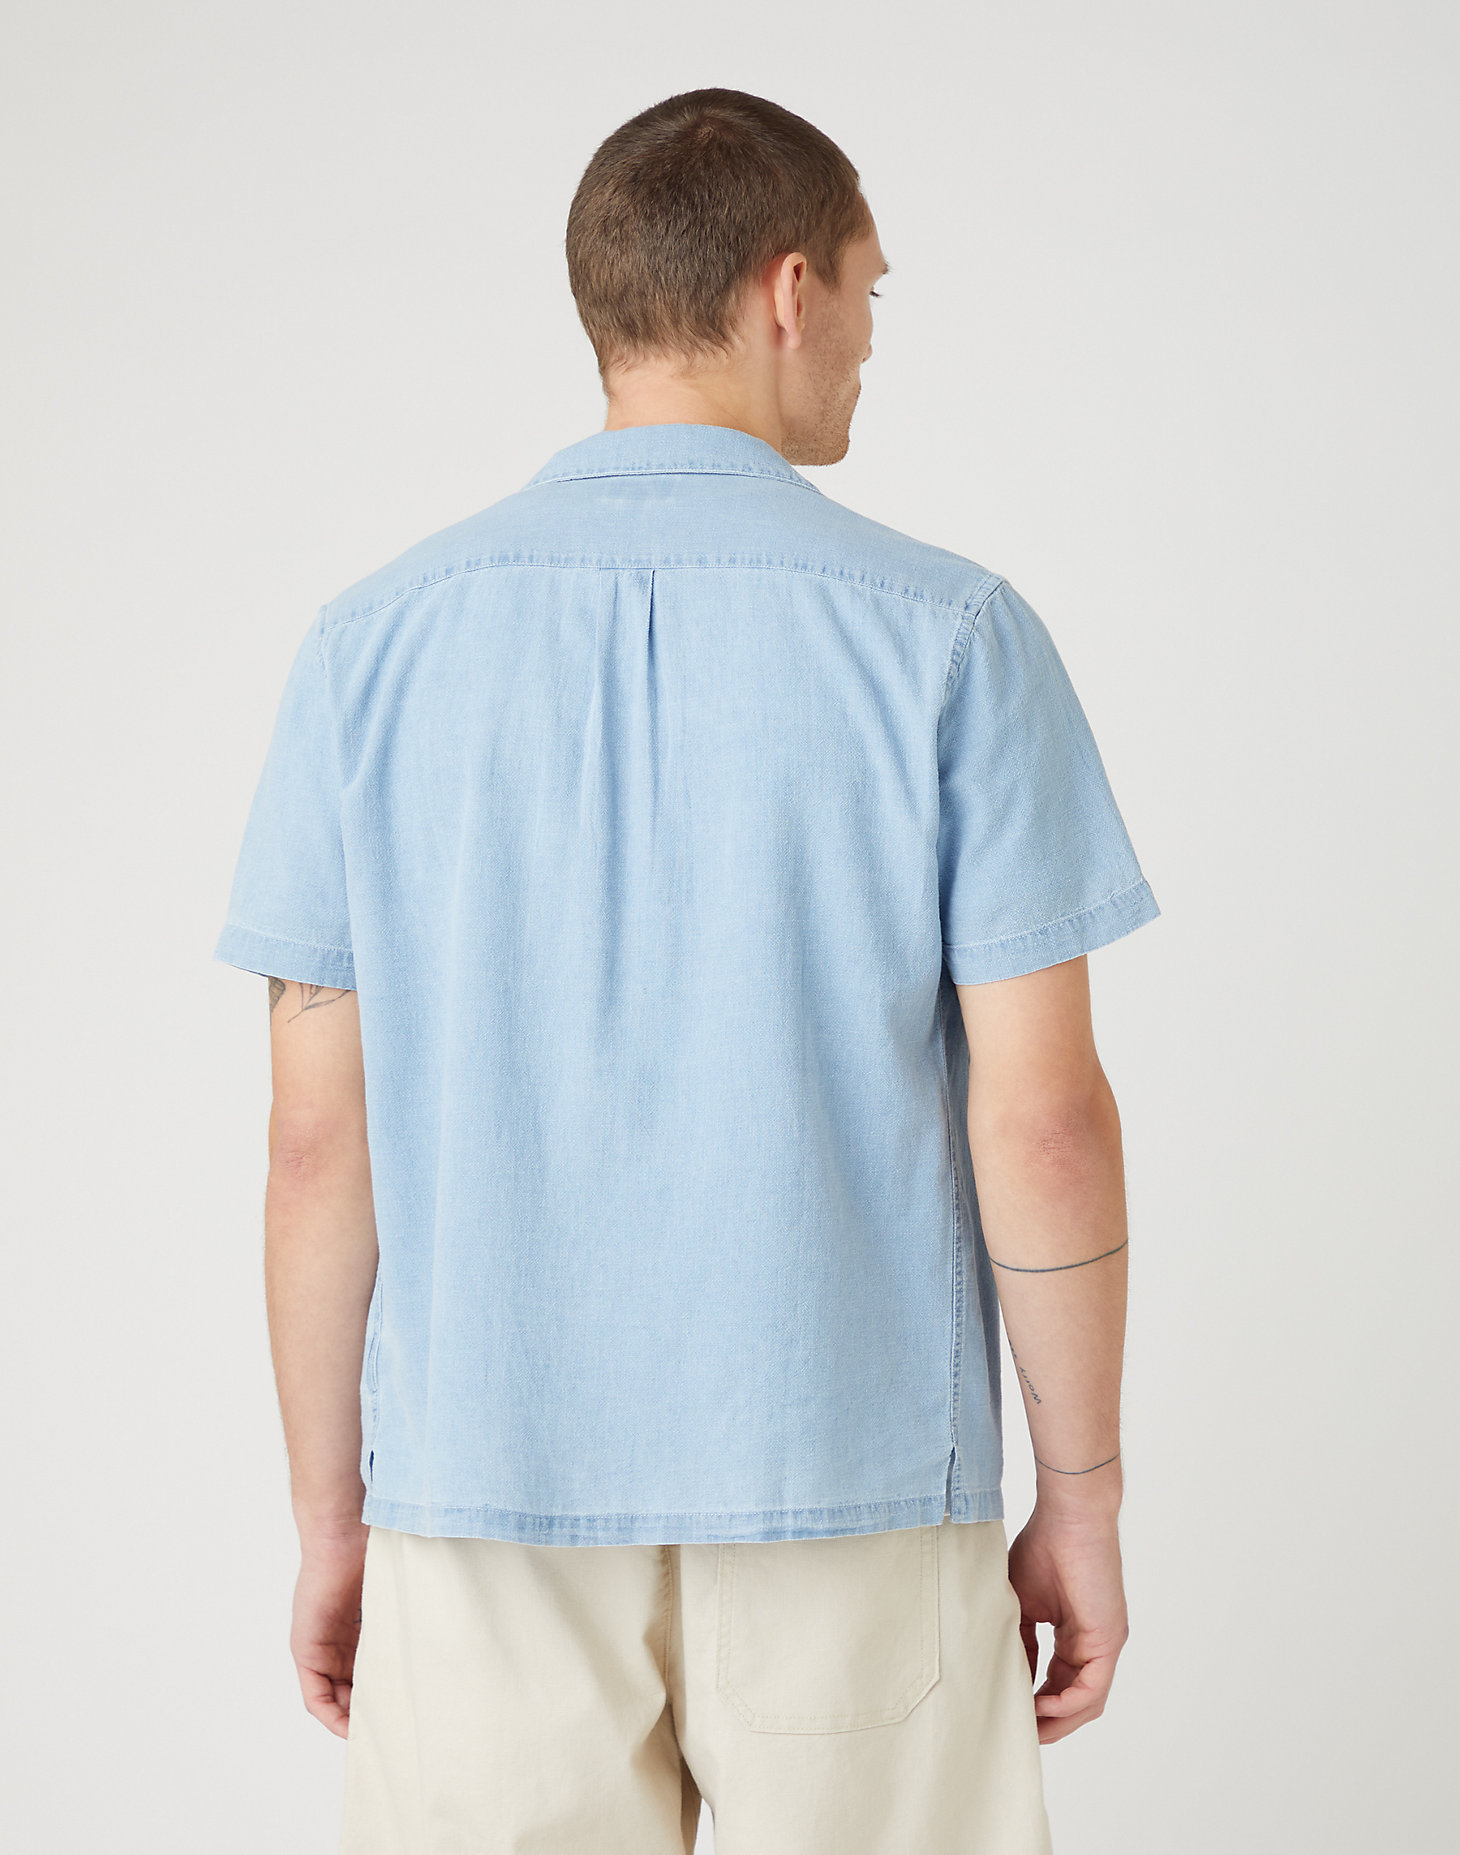 Long Sleeve One Pocket Shirt in Light Indigo alternative view 2